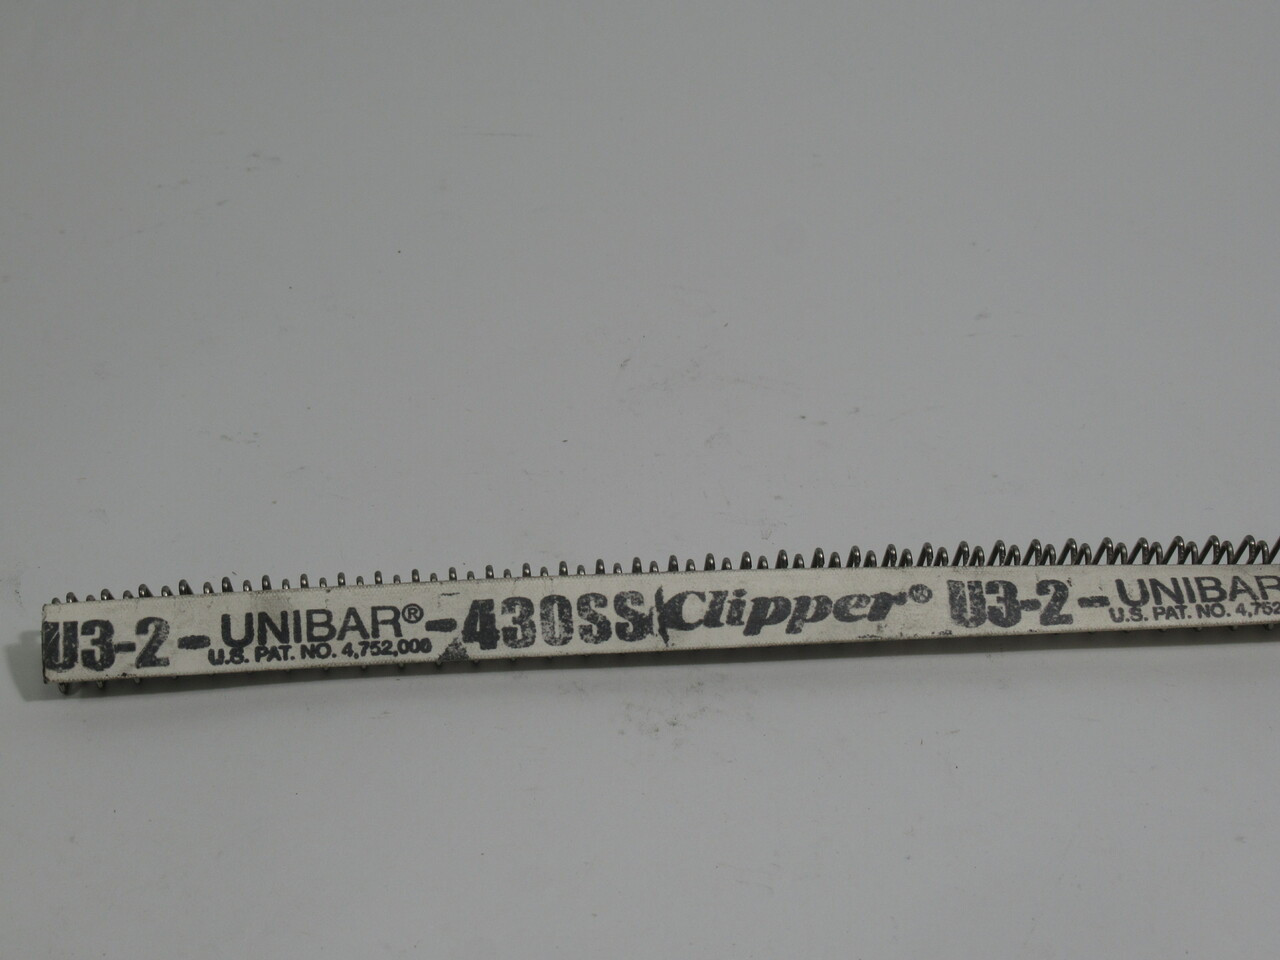 Clipper U3-2S 430SS Unibar Hook Size 10" Length NOP